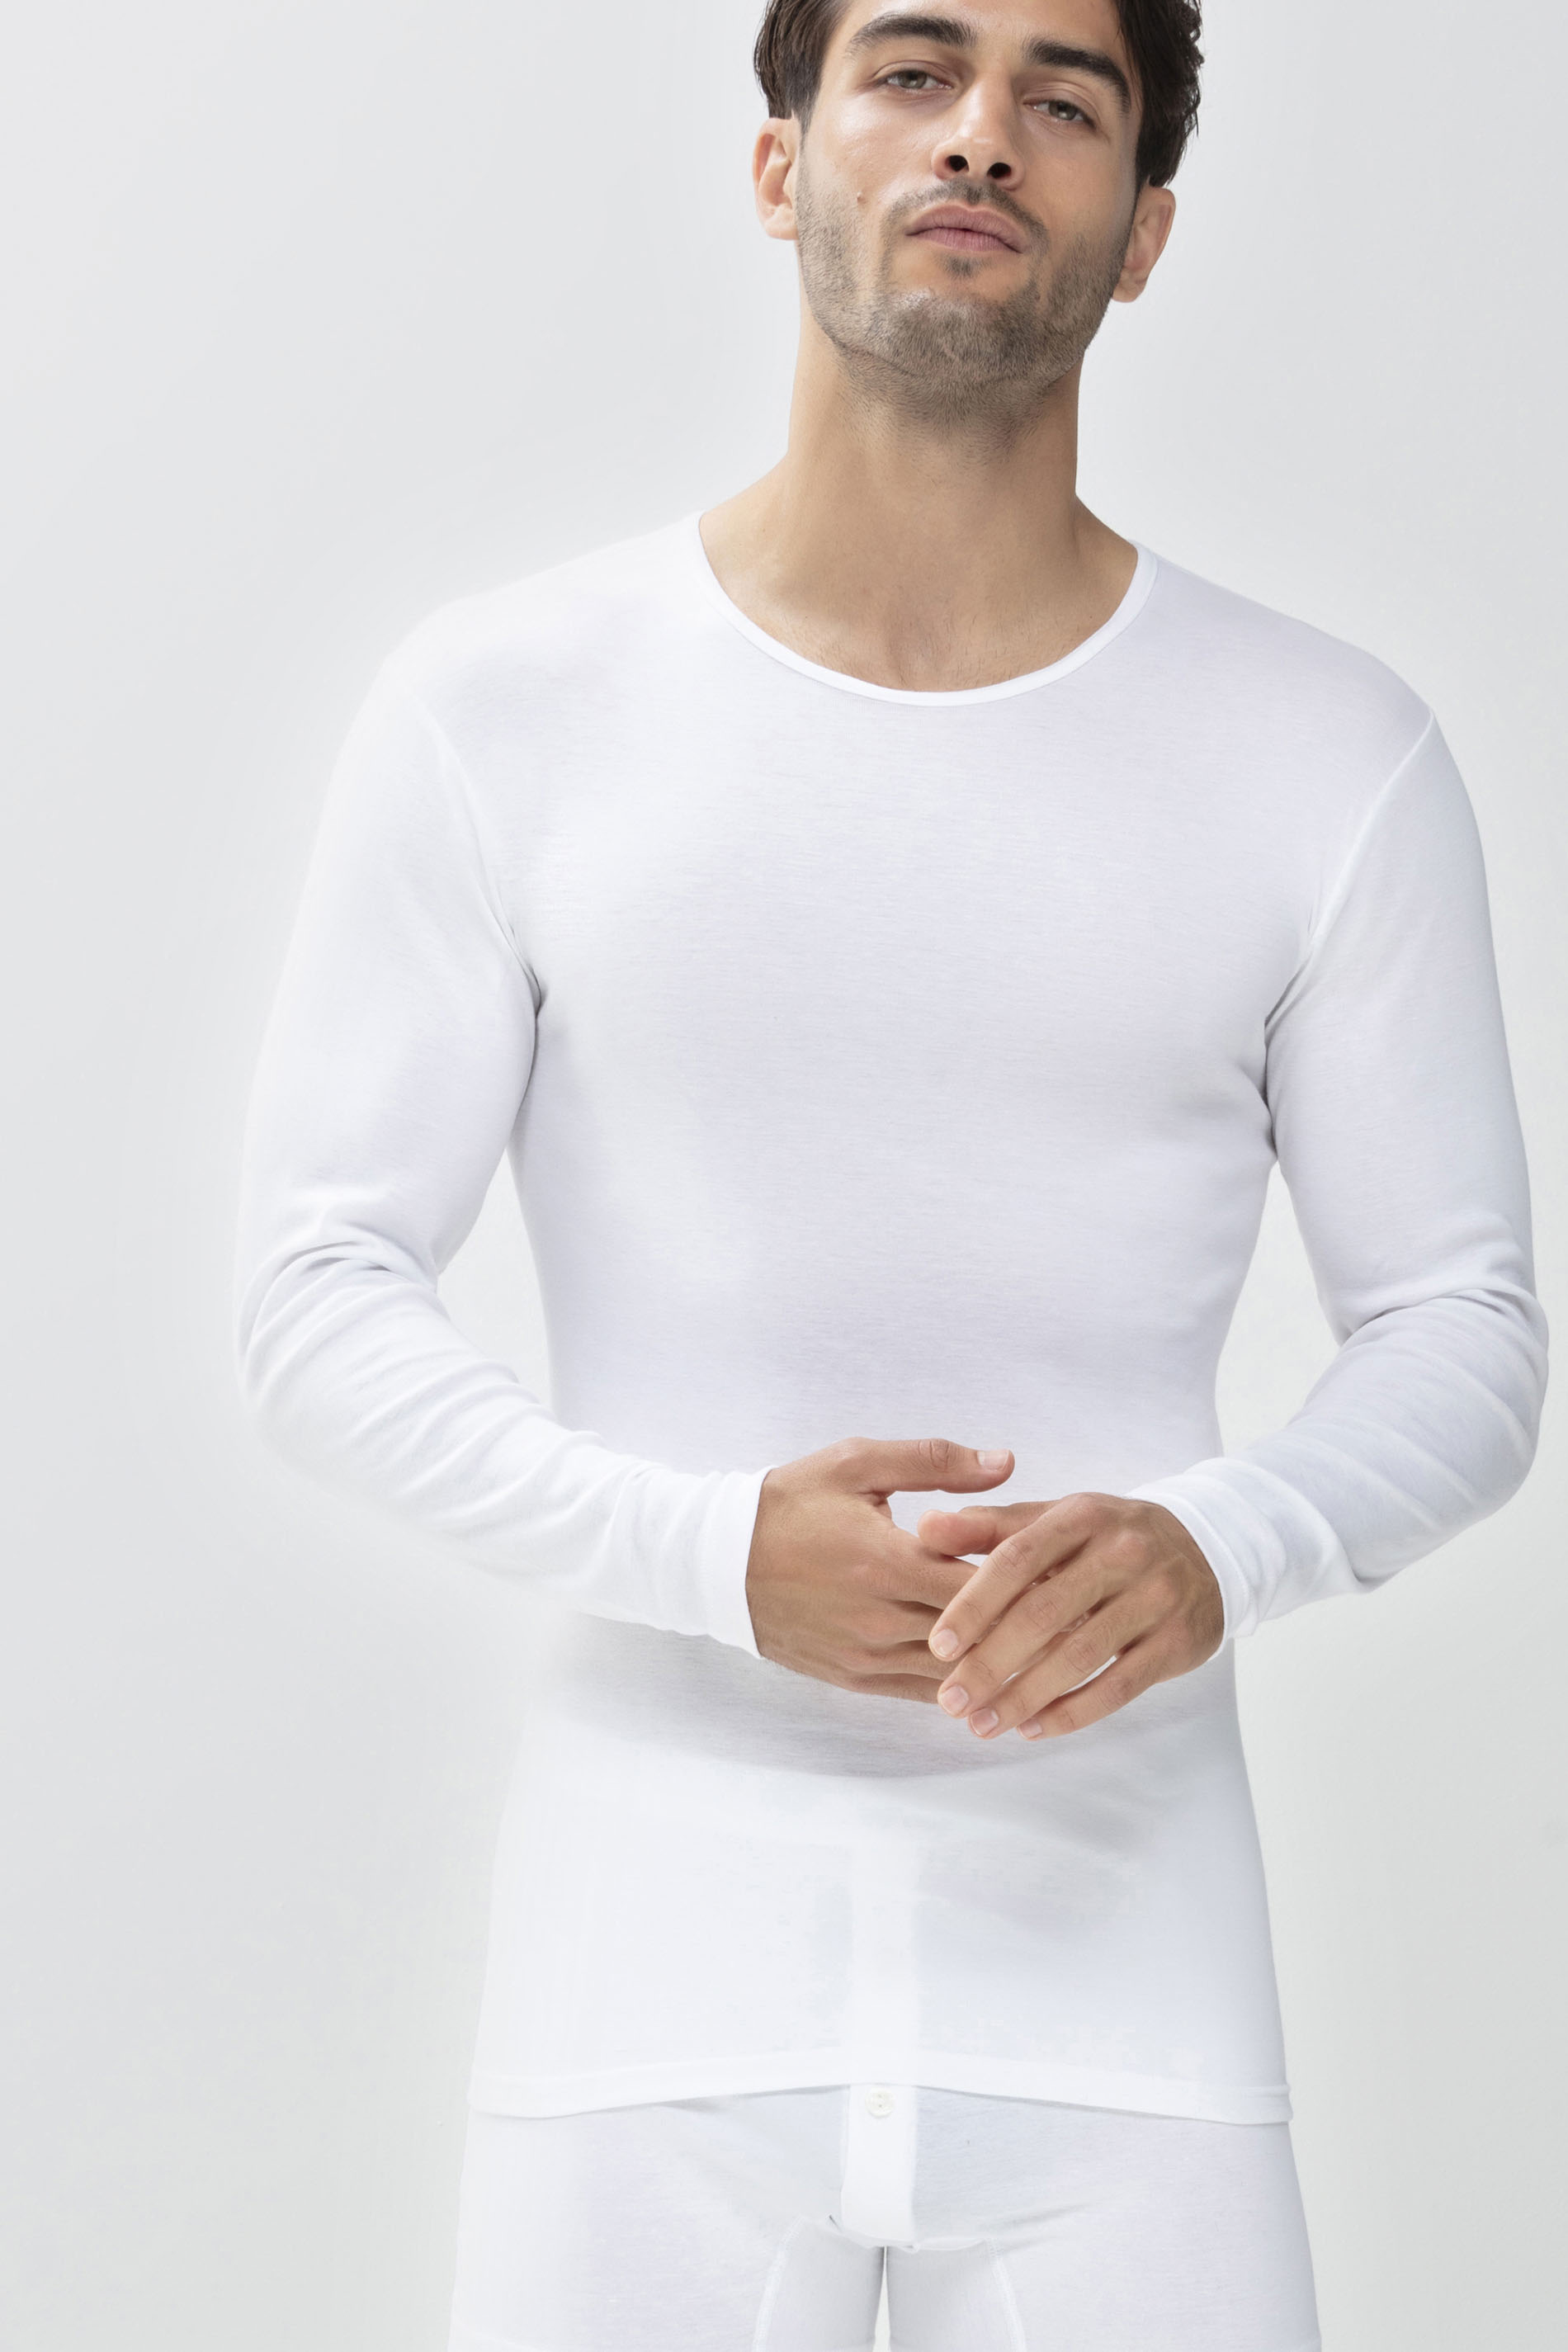 Shirt langarm Weiss Serie Casual Cotton Frontansicht | mey®